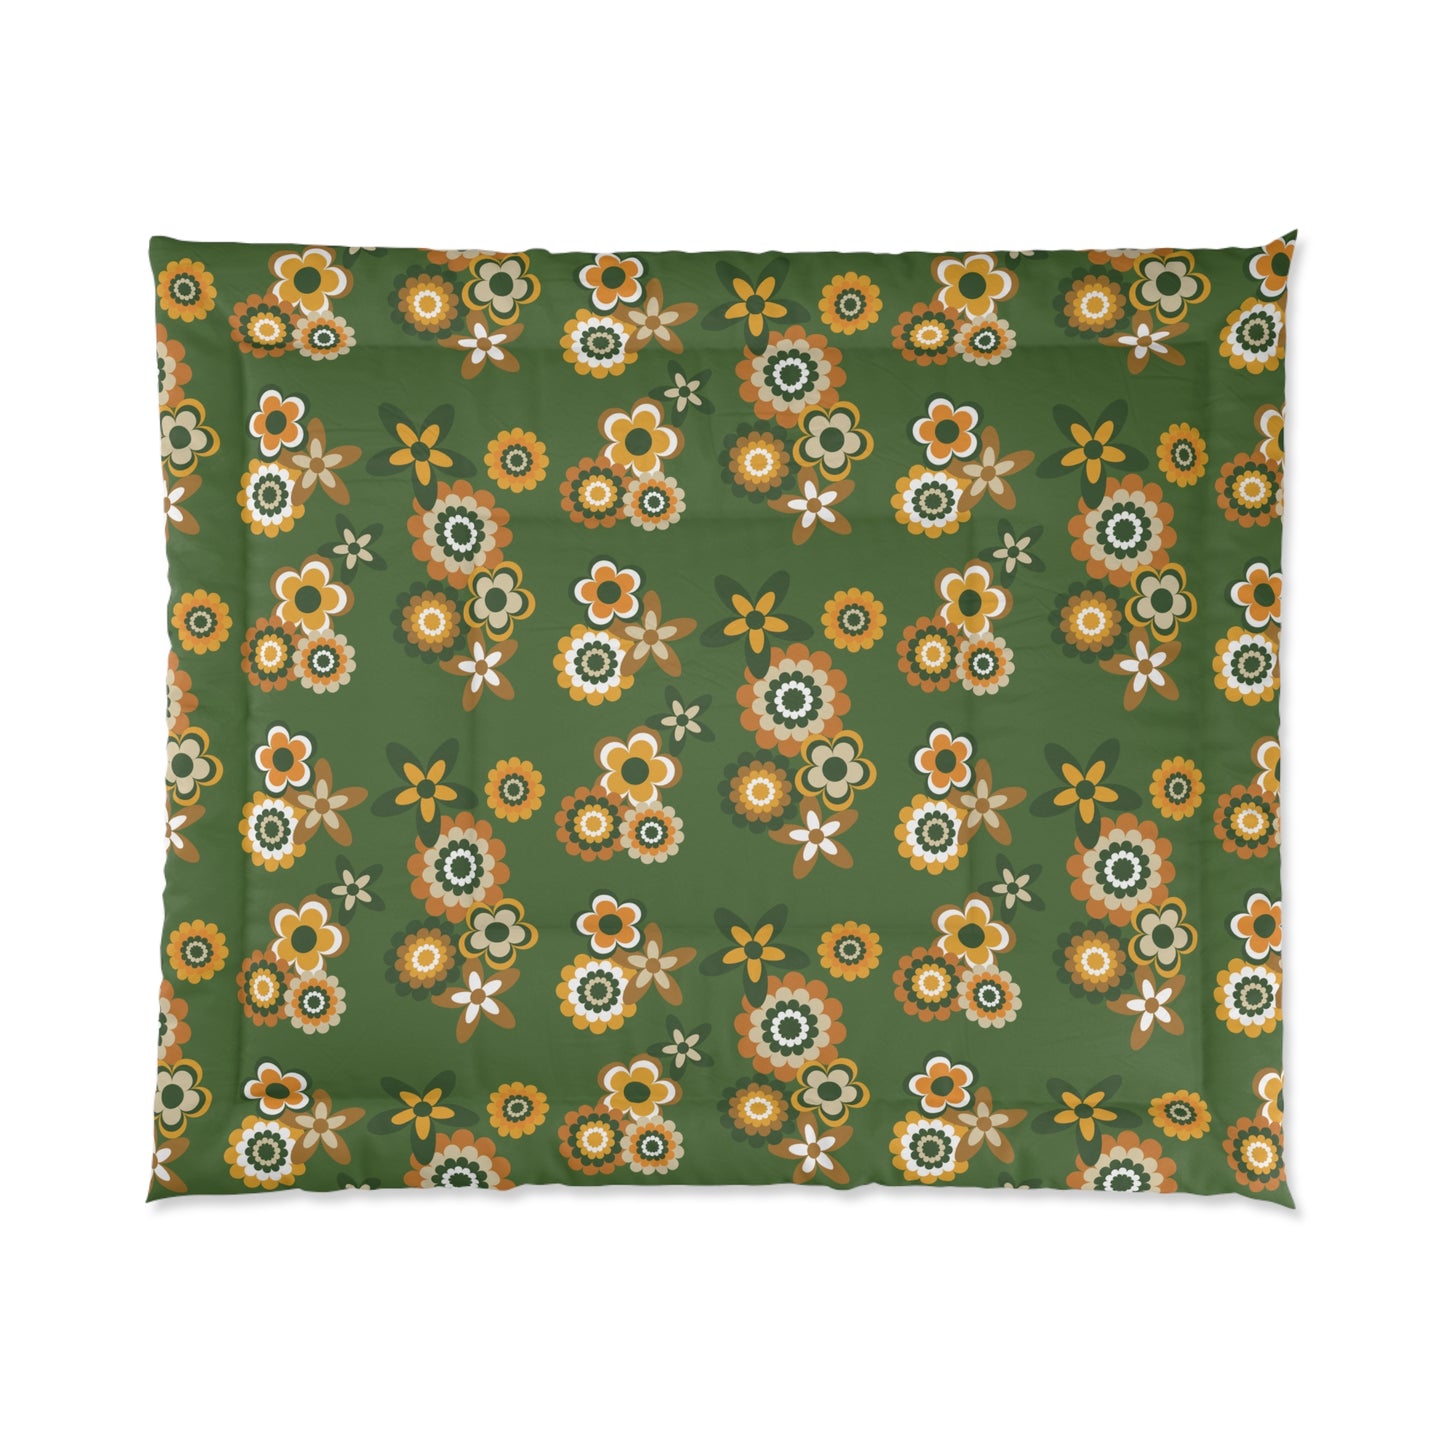 Retro 60s 70s Groovy Flowers Mid Century Mod Mustard & Green Comforter